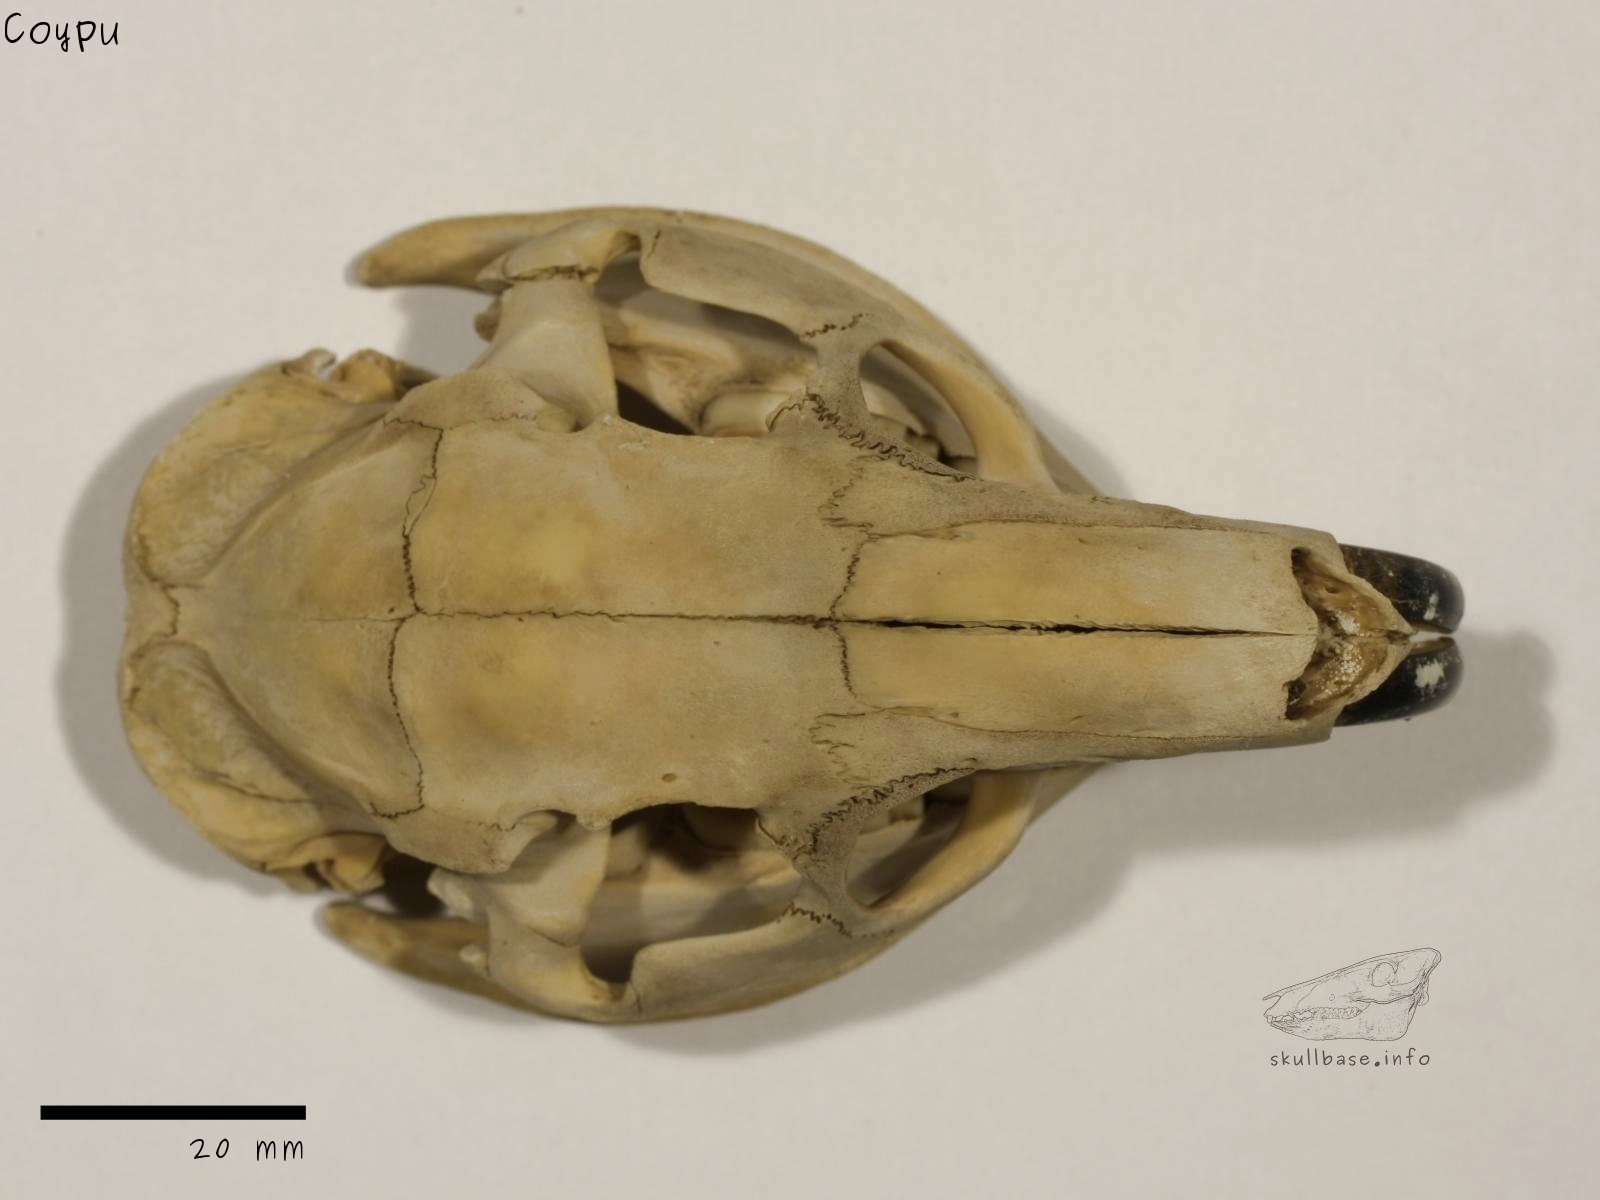 Coypu (Myocastor coypus) skull dorsal view